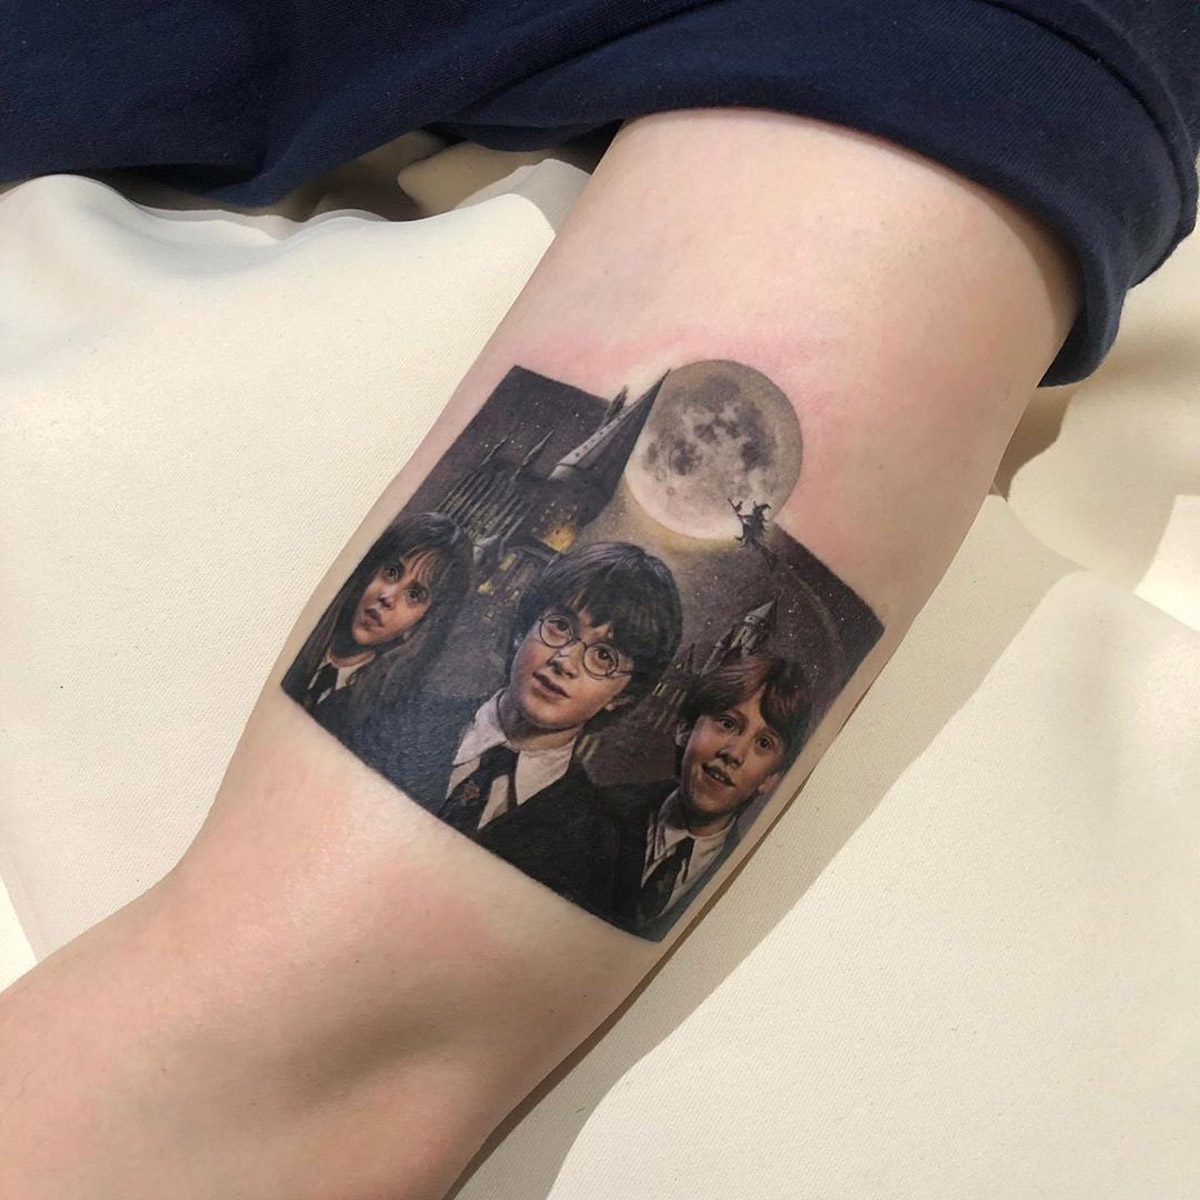 Harry Potter Tattoos Design Inspiration for Fans - Inside Out